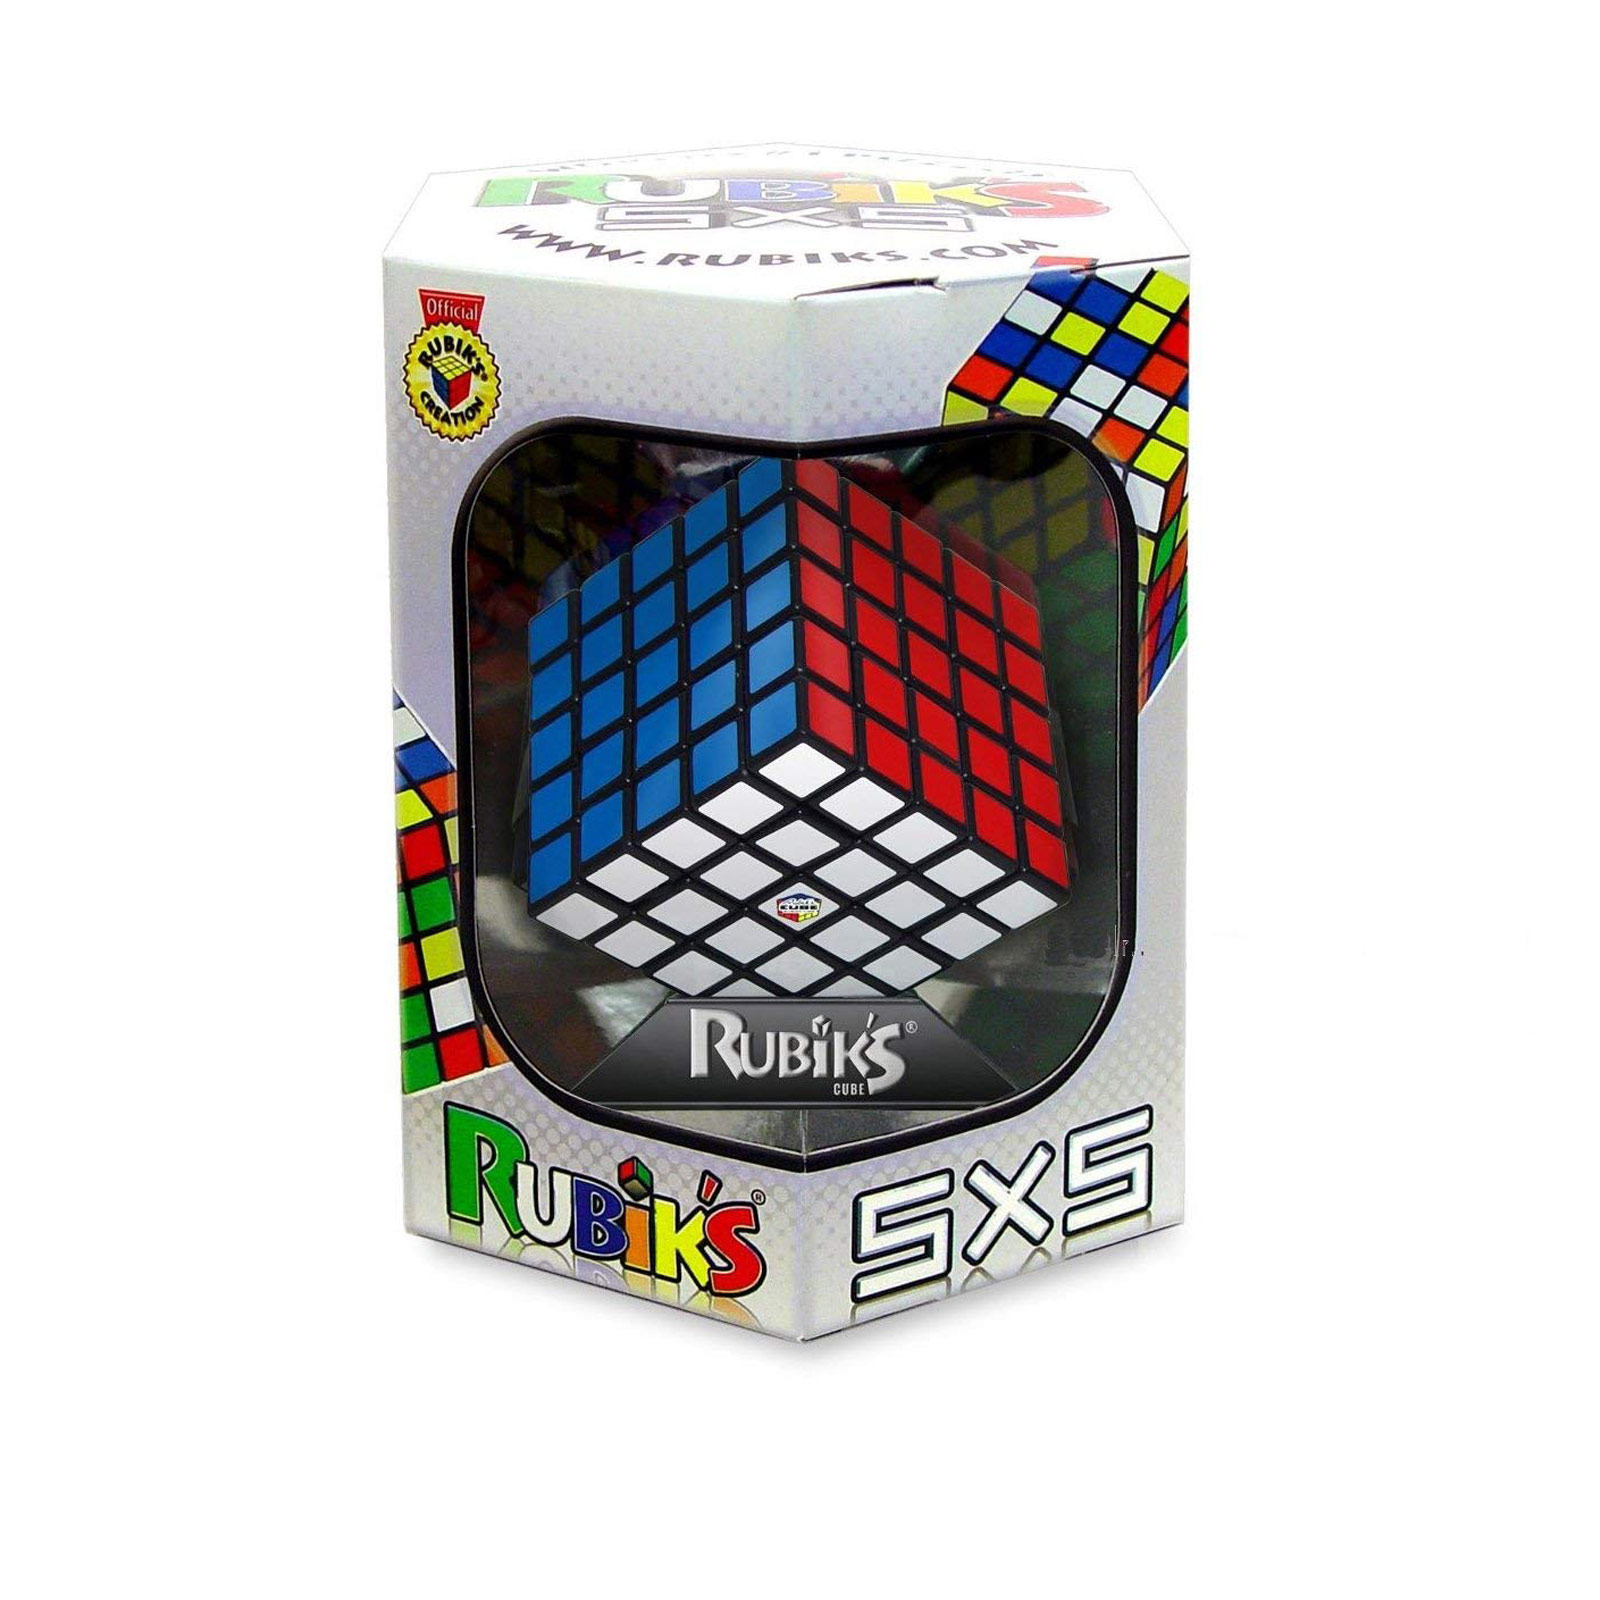 Rubiks 5 X 5